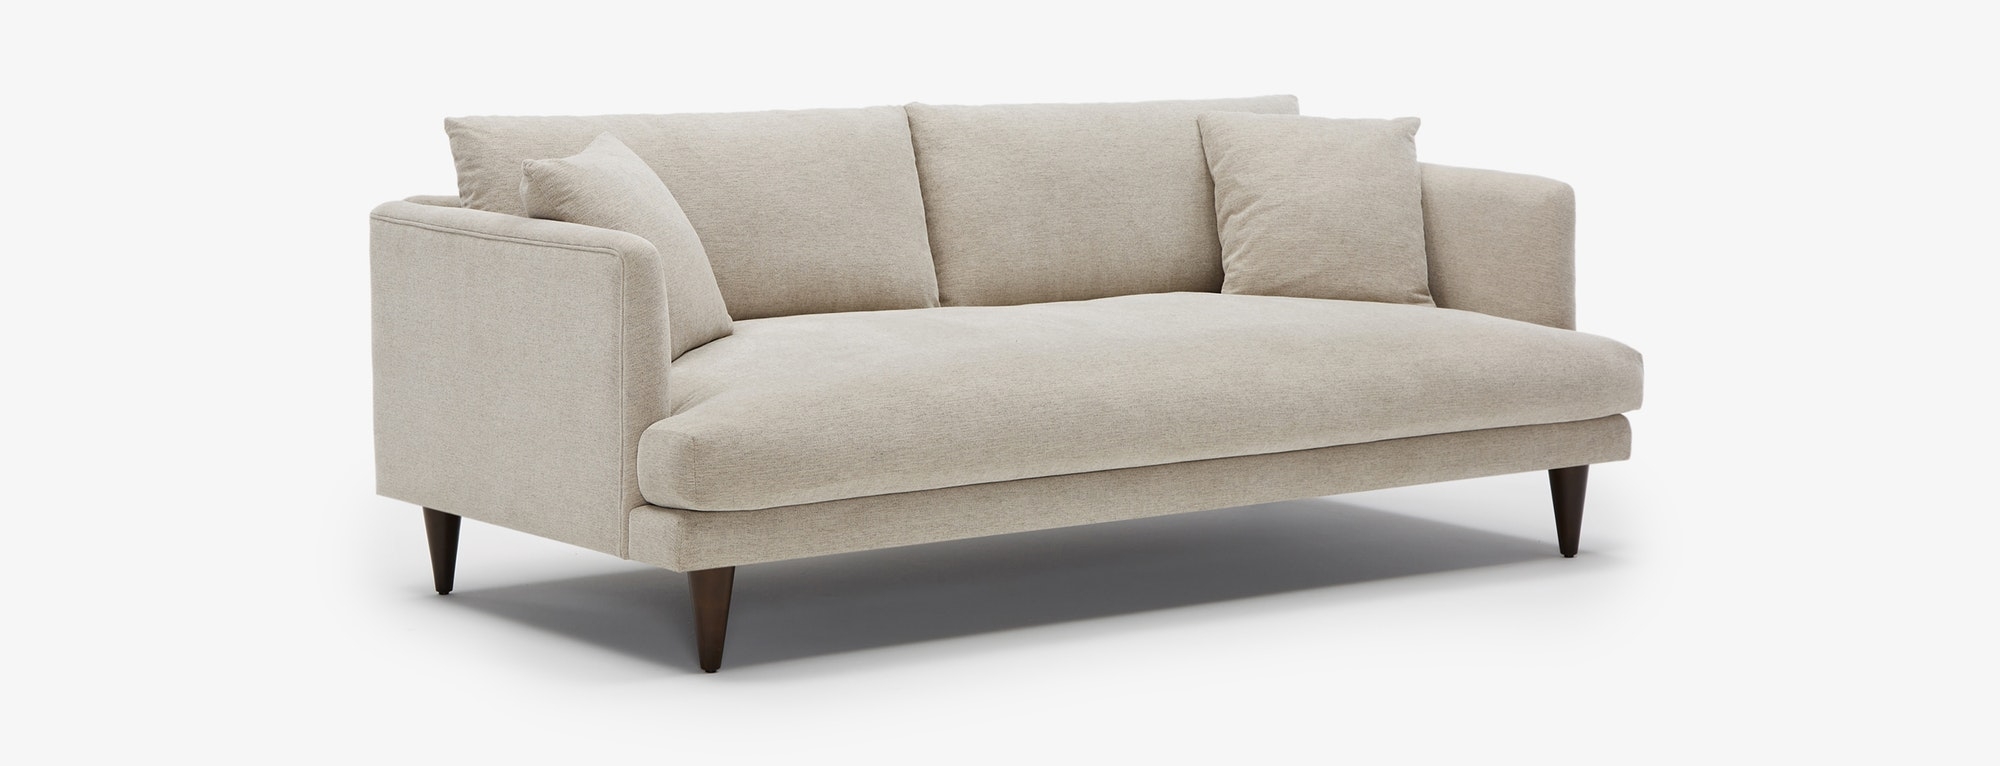 Lewis Mid Century Modern Sofa - Merit Dove - Mocha - Cylinder Legs - Image 3